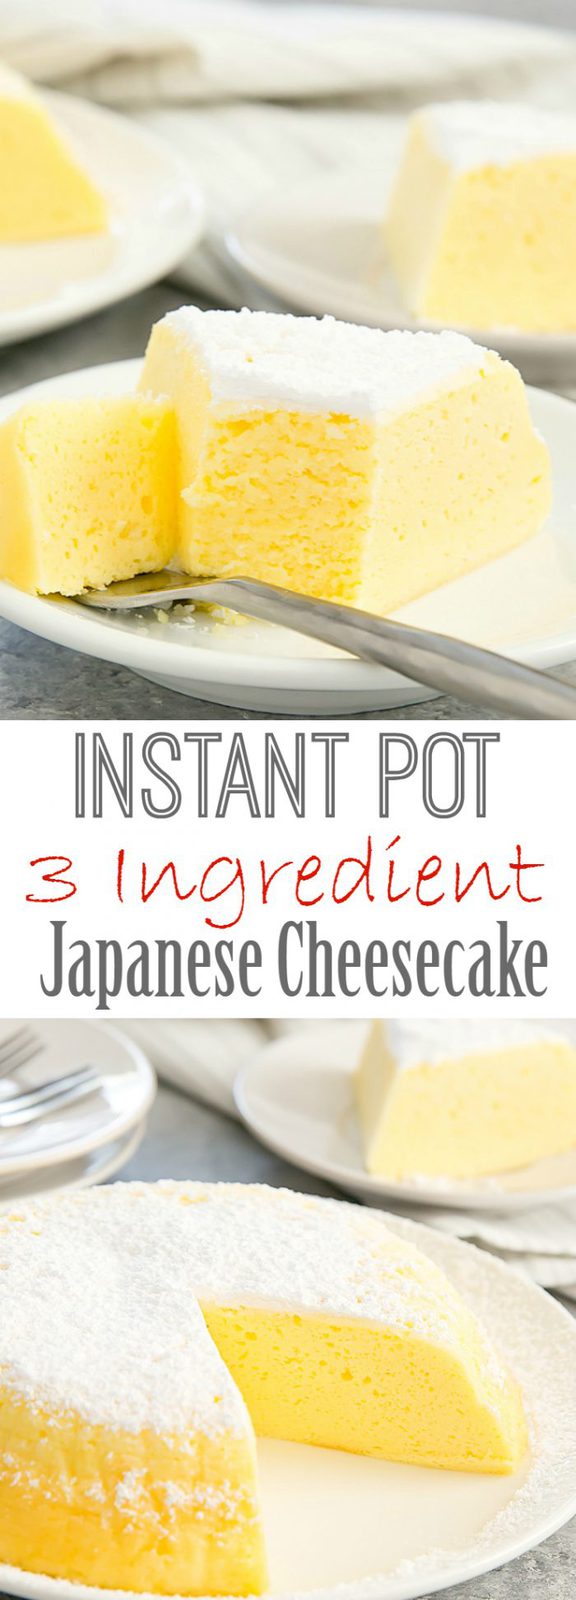 Instant Pot 3 Ingredient Japanese Cheesecake